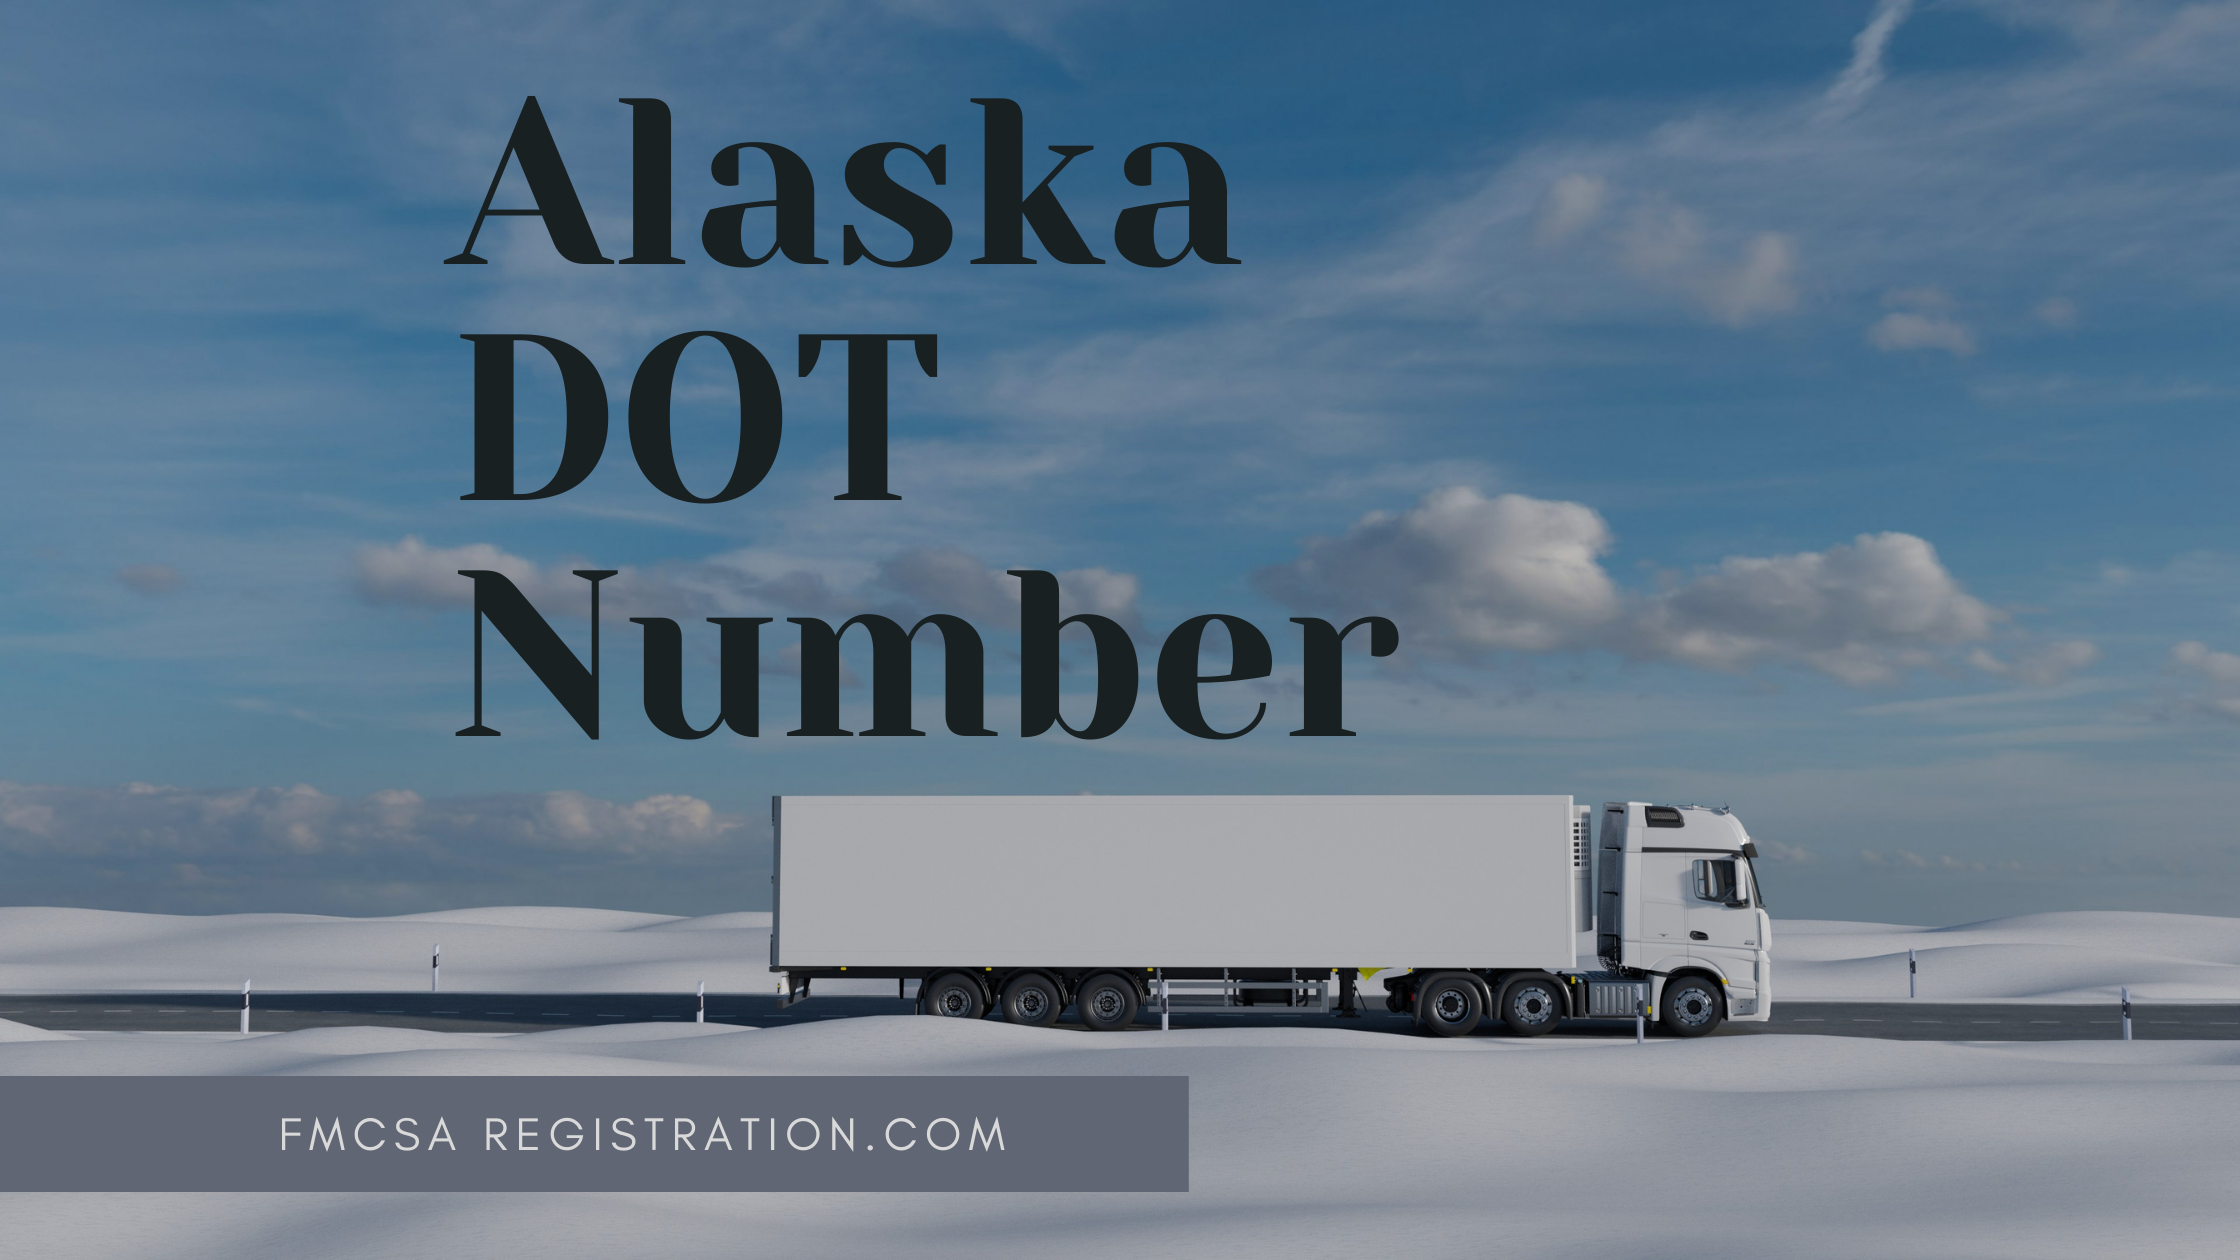 Alaska DOT Number